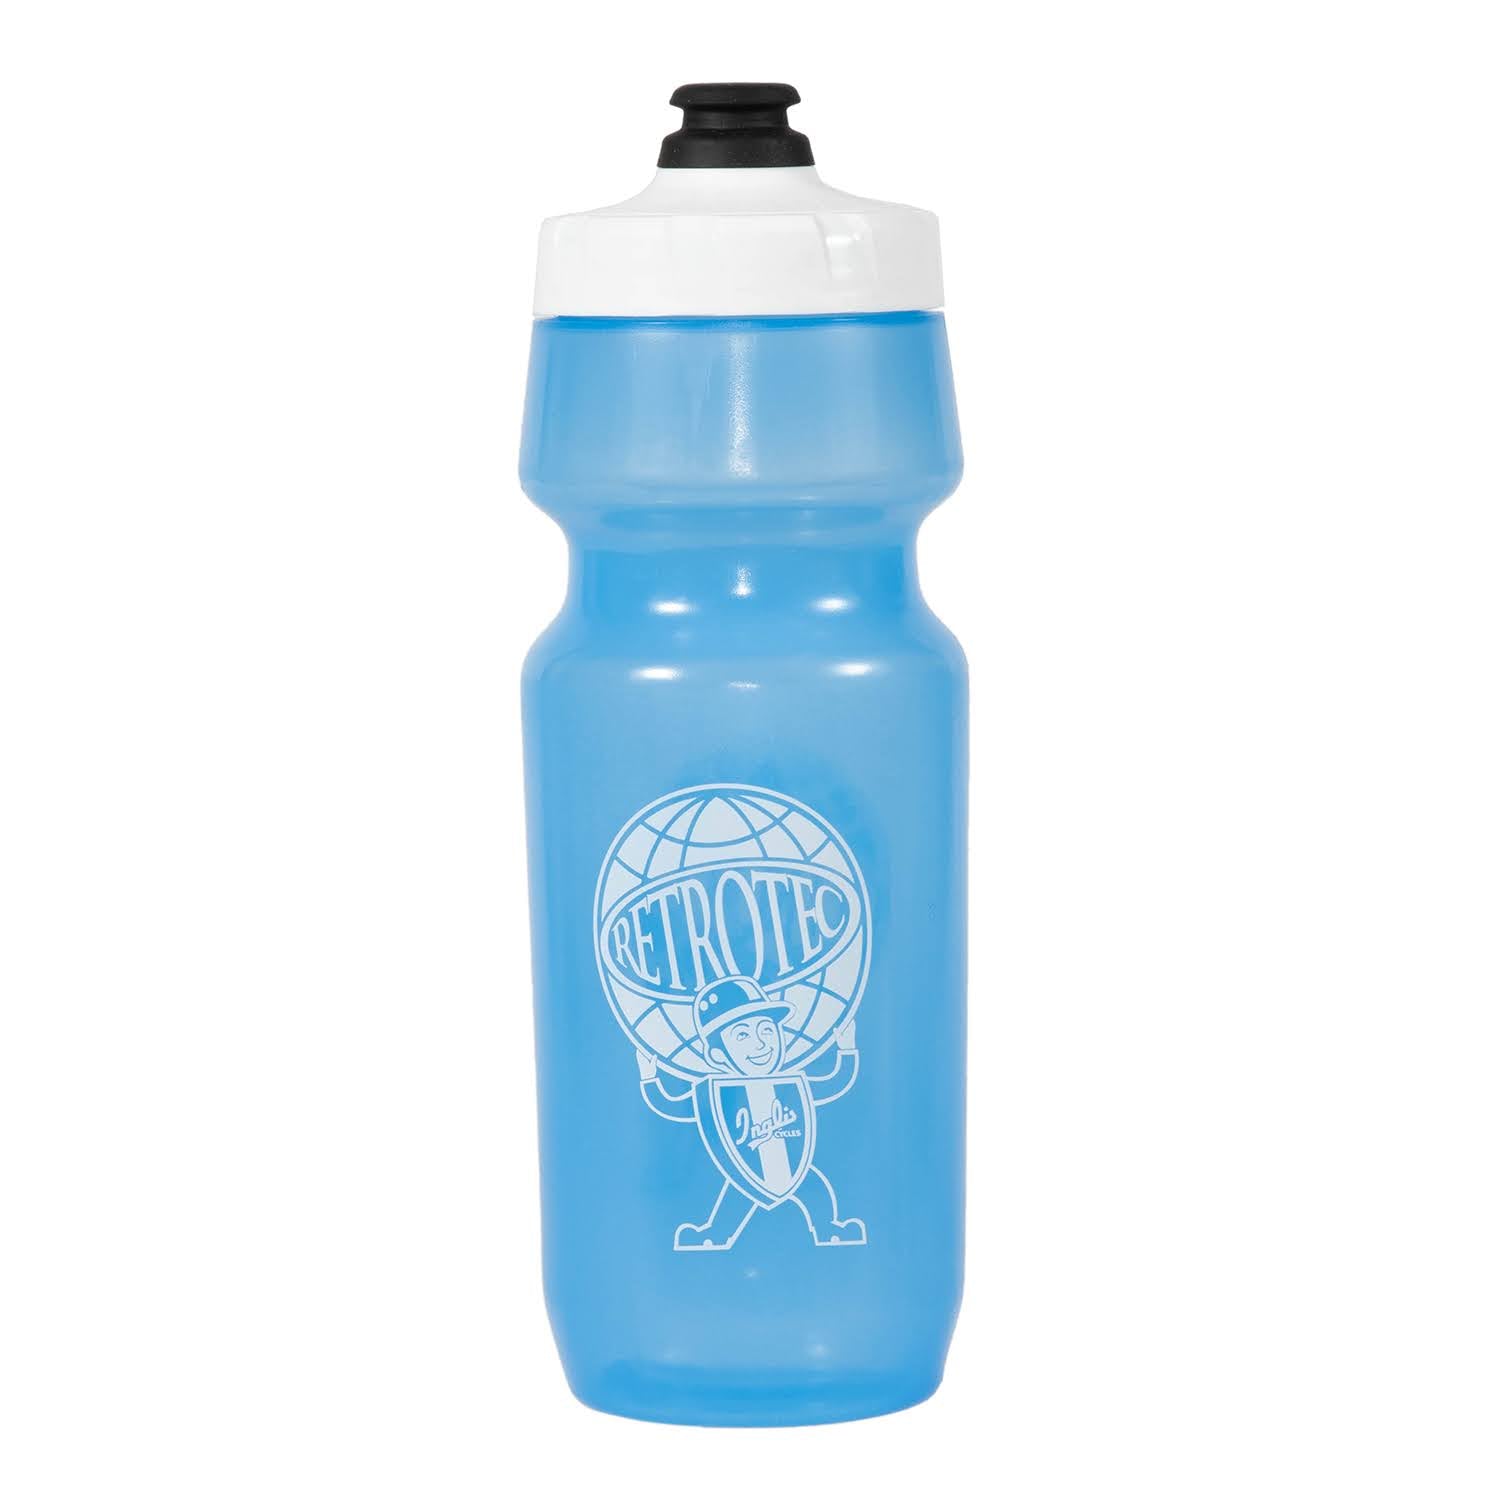 RETROTEC Water bottle